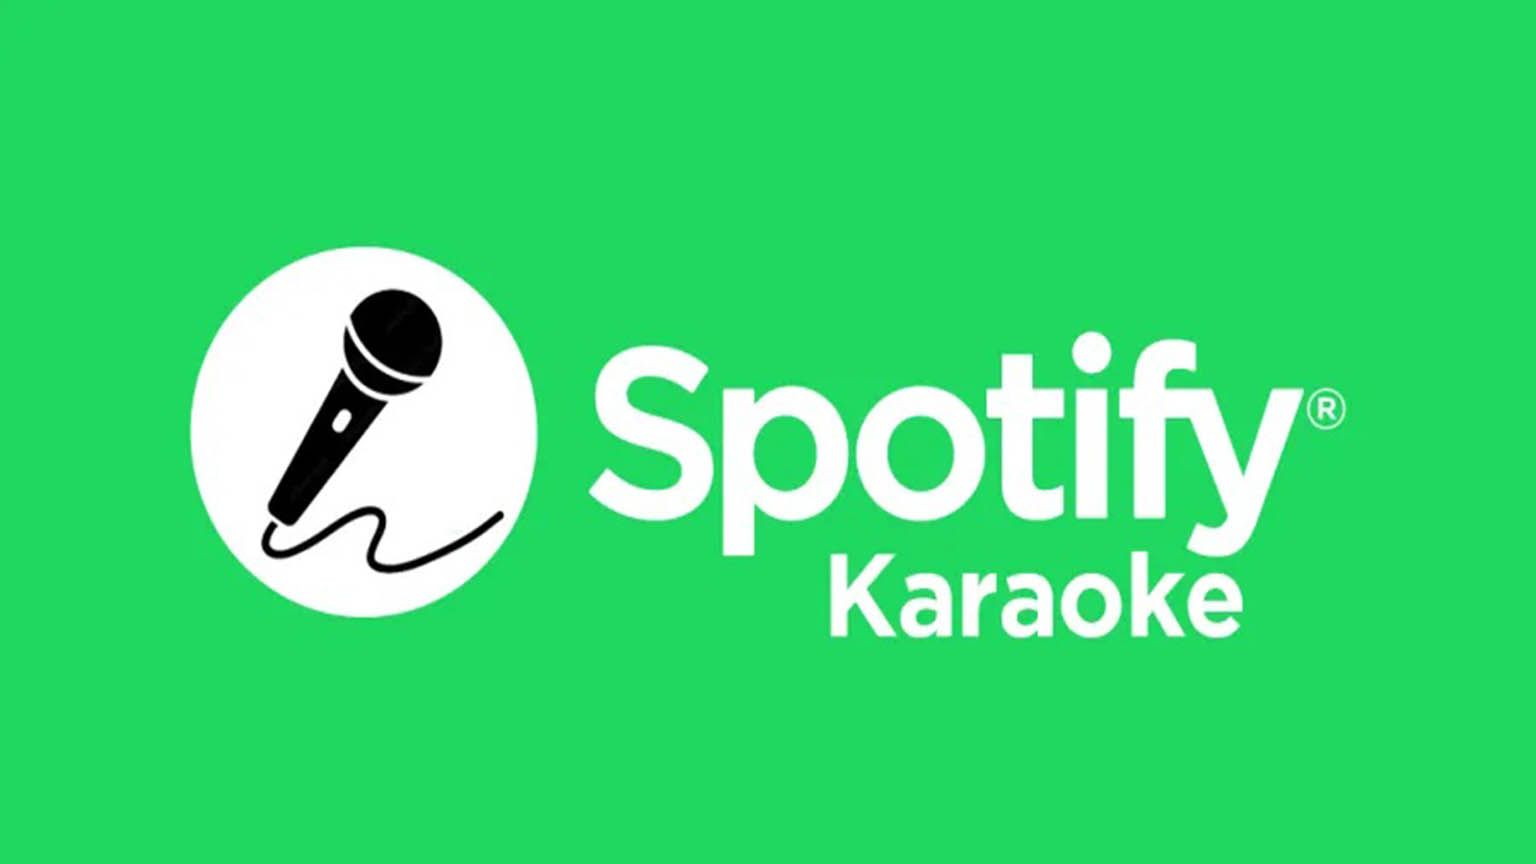 Karaoke is now available via Spotify